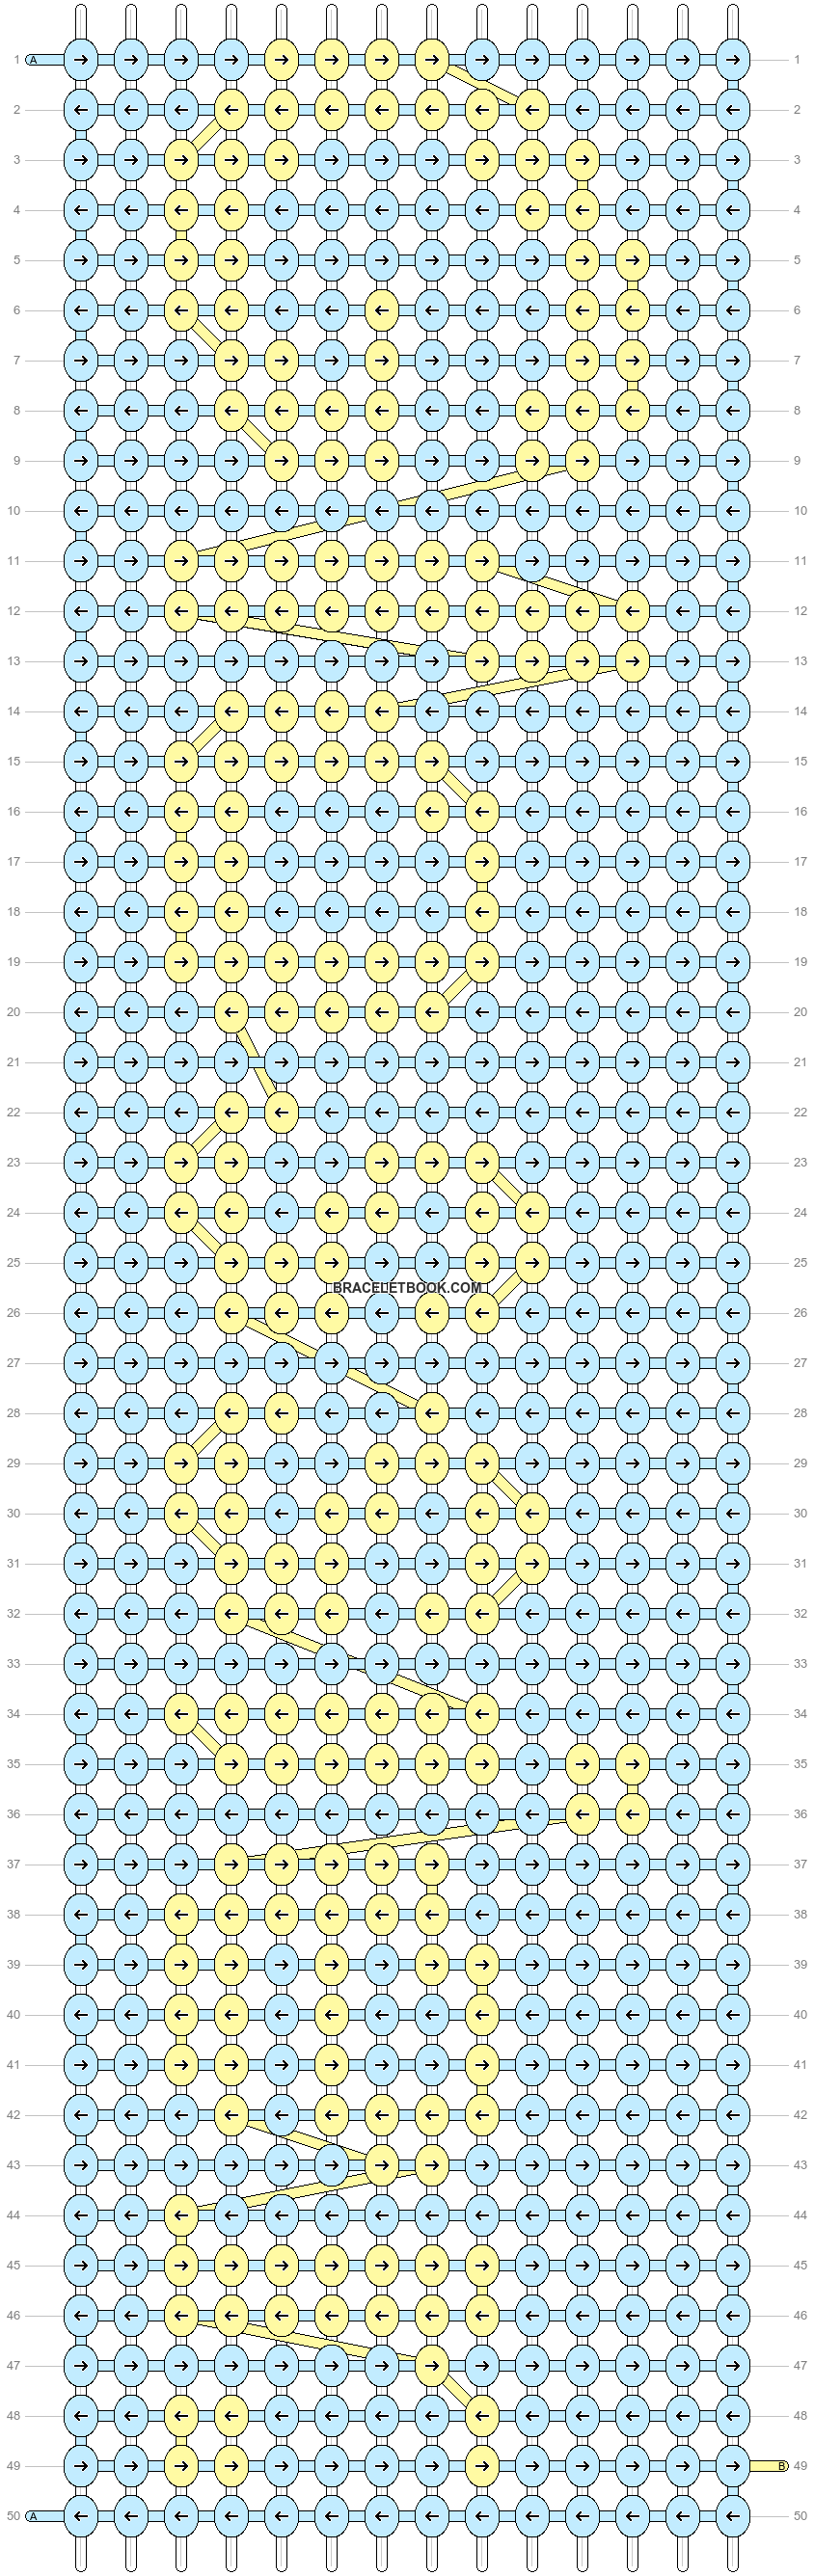 Alpha pattern #51615 variation #86125 pattern